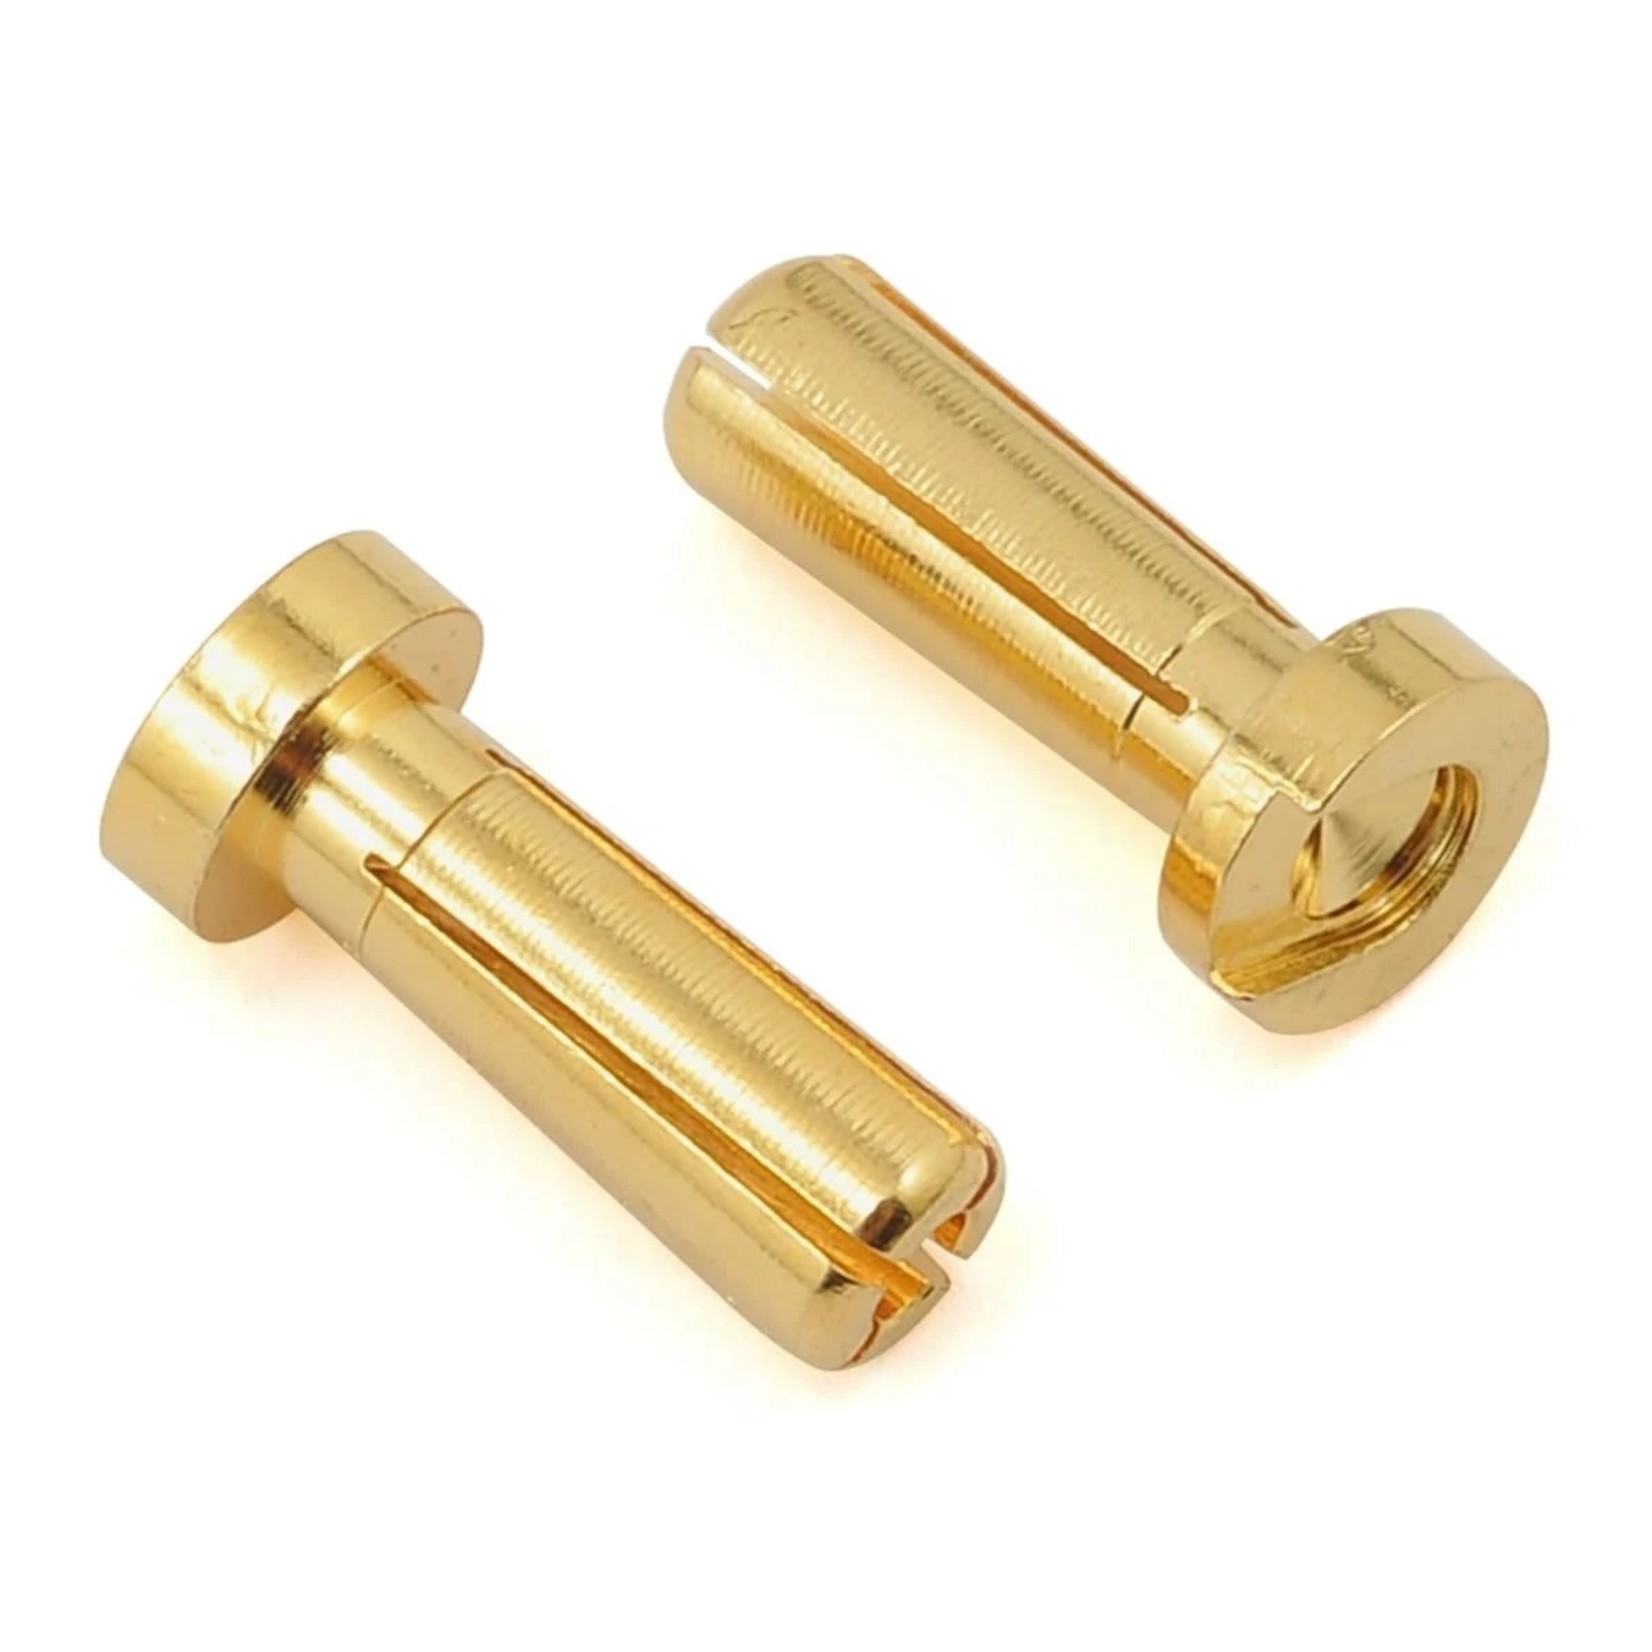 ProTek RC ProTek RC 4mm Low Profile "Super Bullet" Solid Gold Connectors (2 Male) #PTK-5044